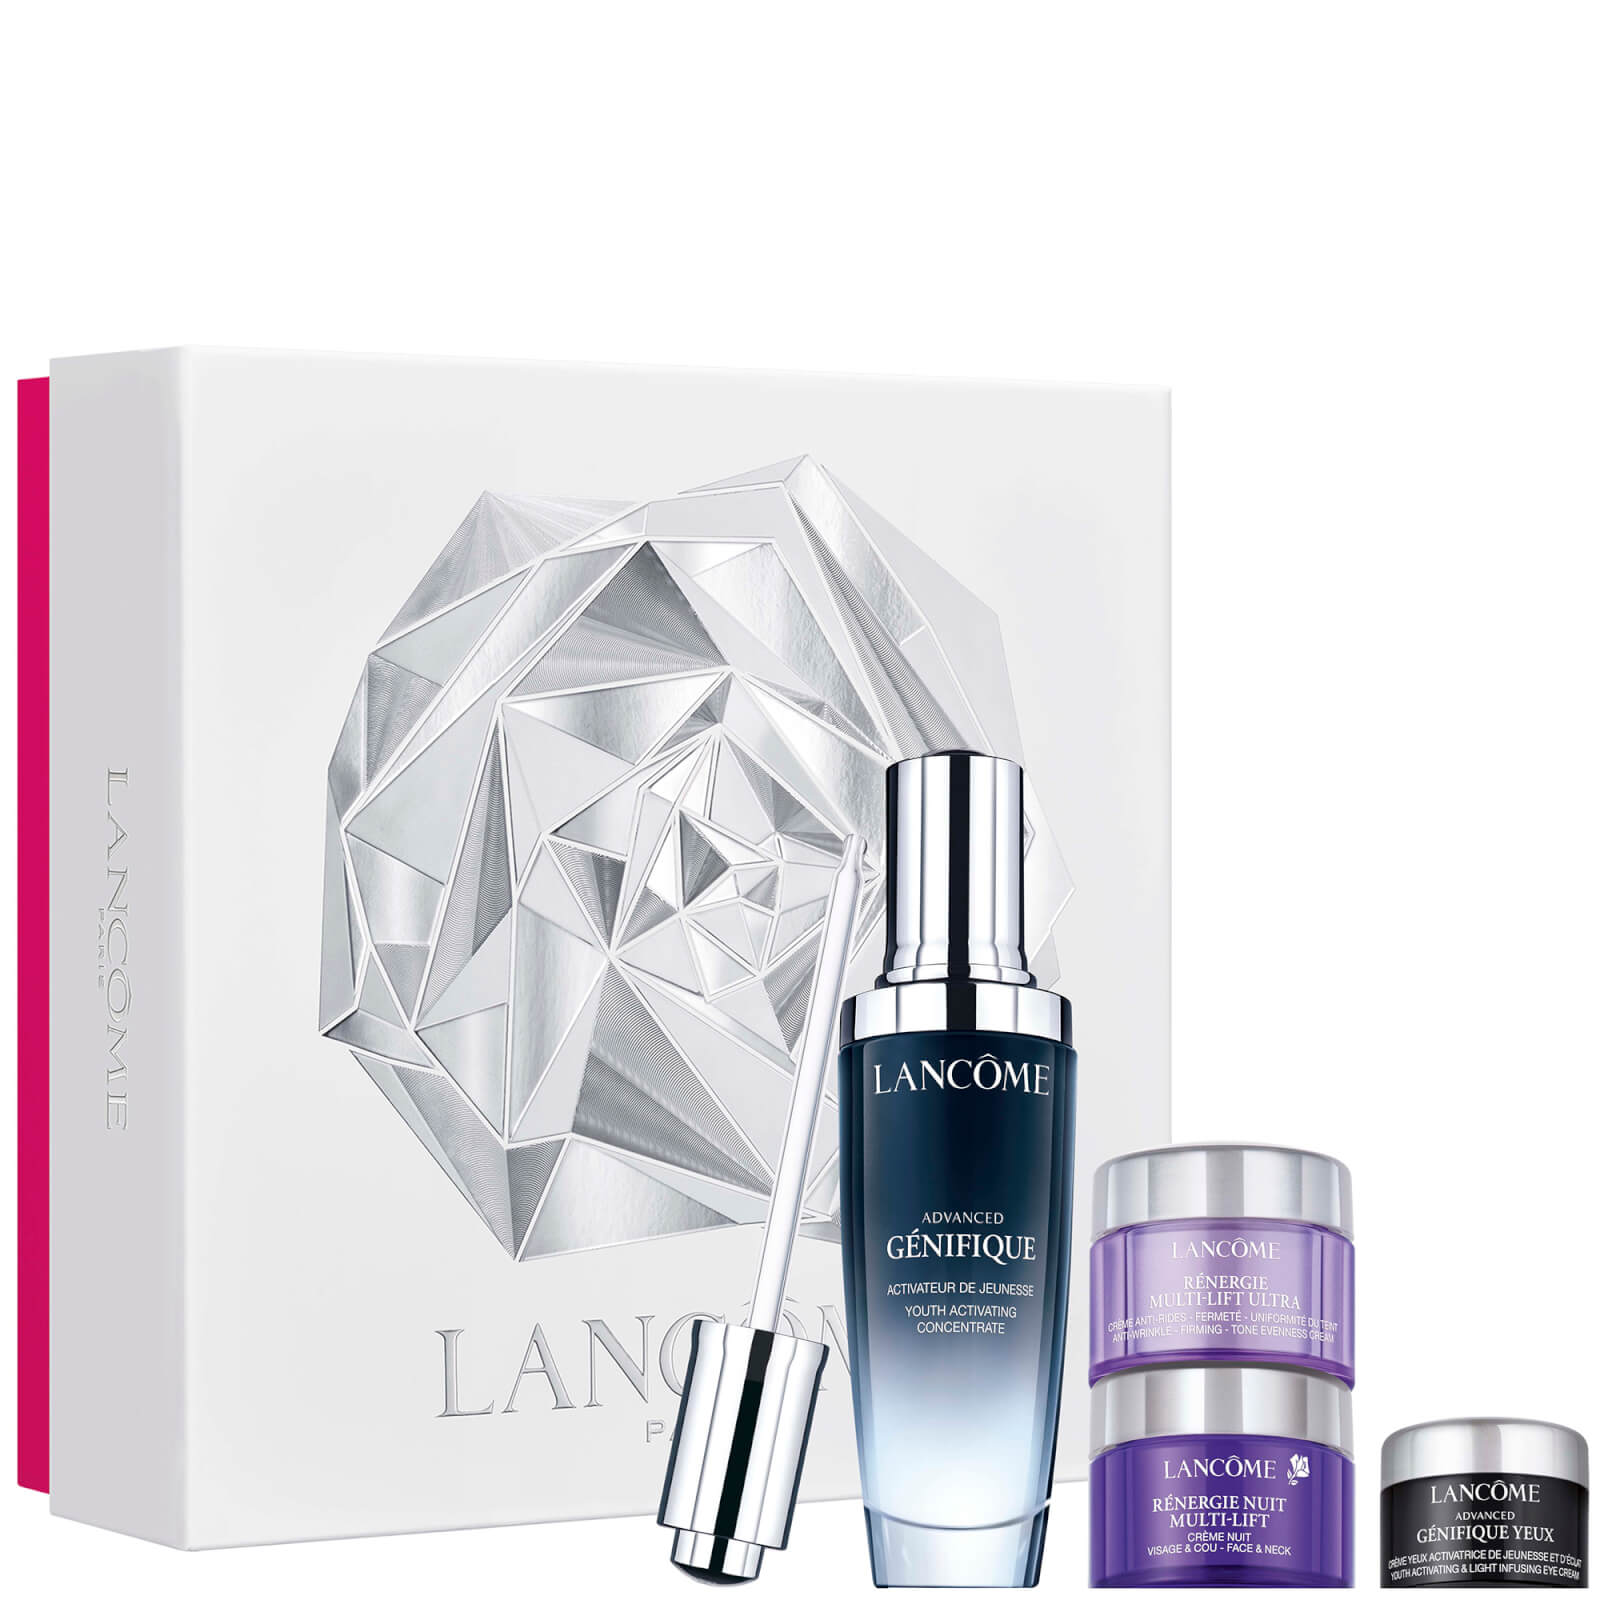 Lancôme Advanced Génifique Serum 50ml Holiday Skincare Gift Set For Her (Worth £144.00)